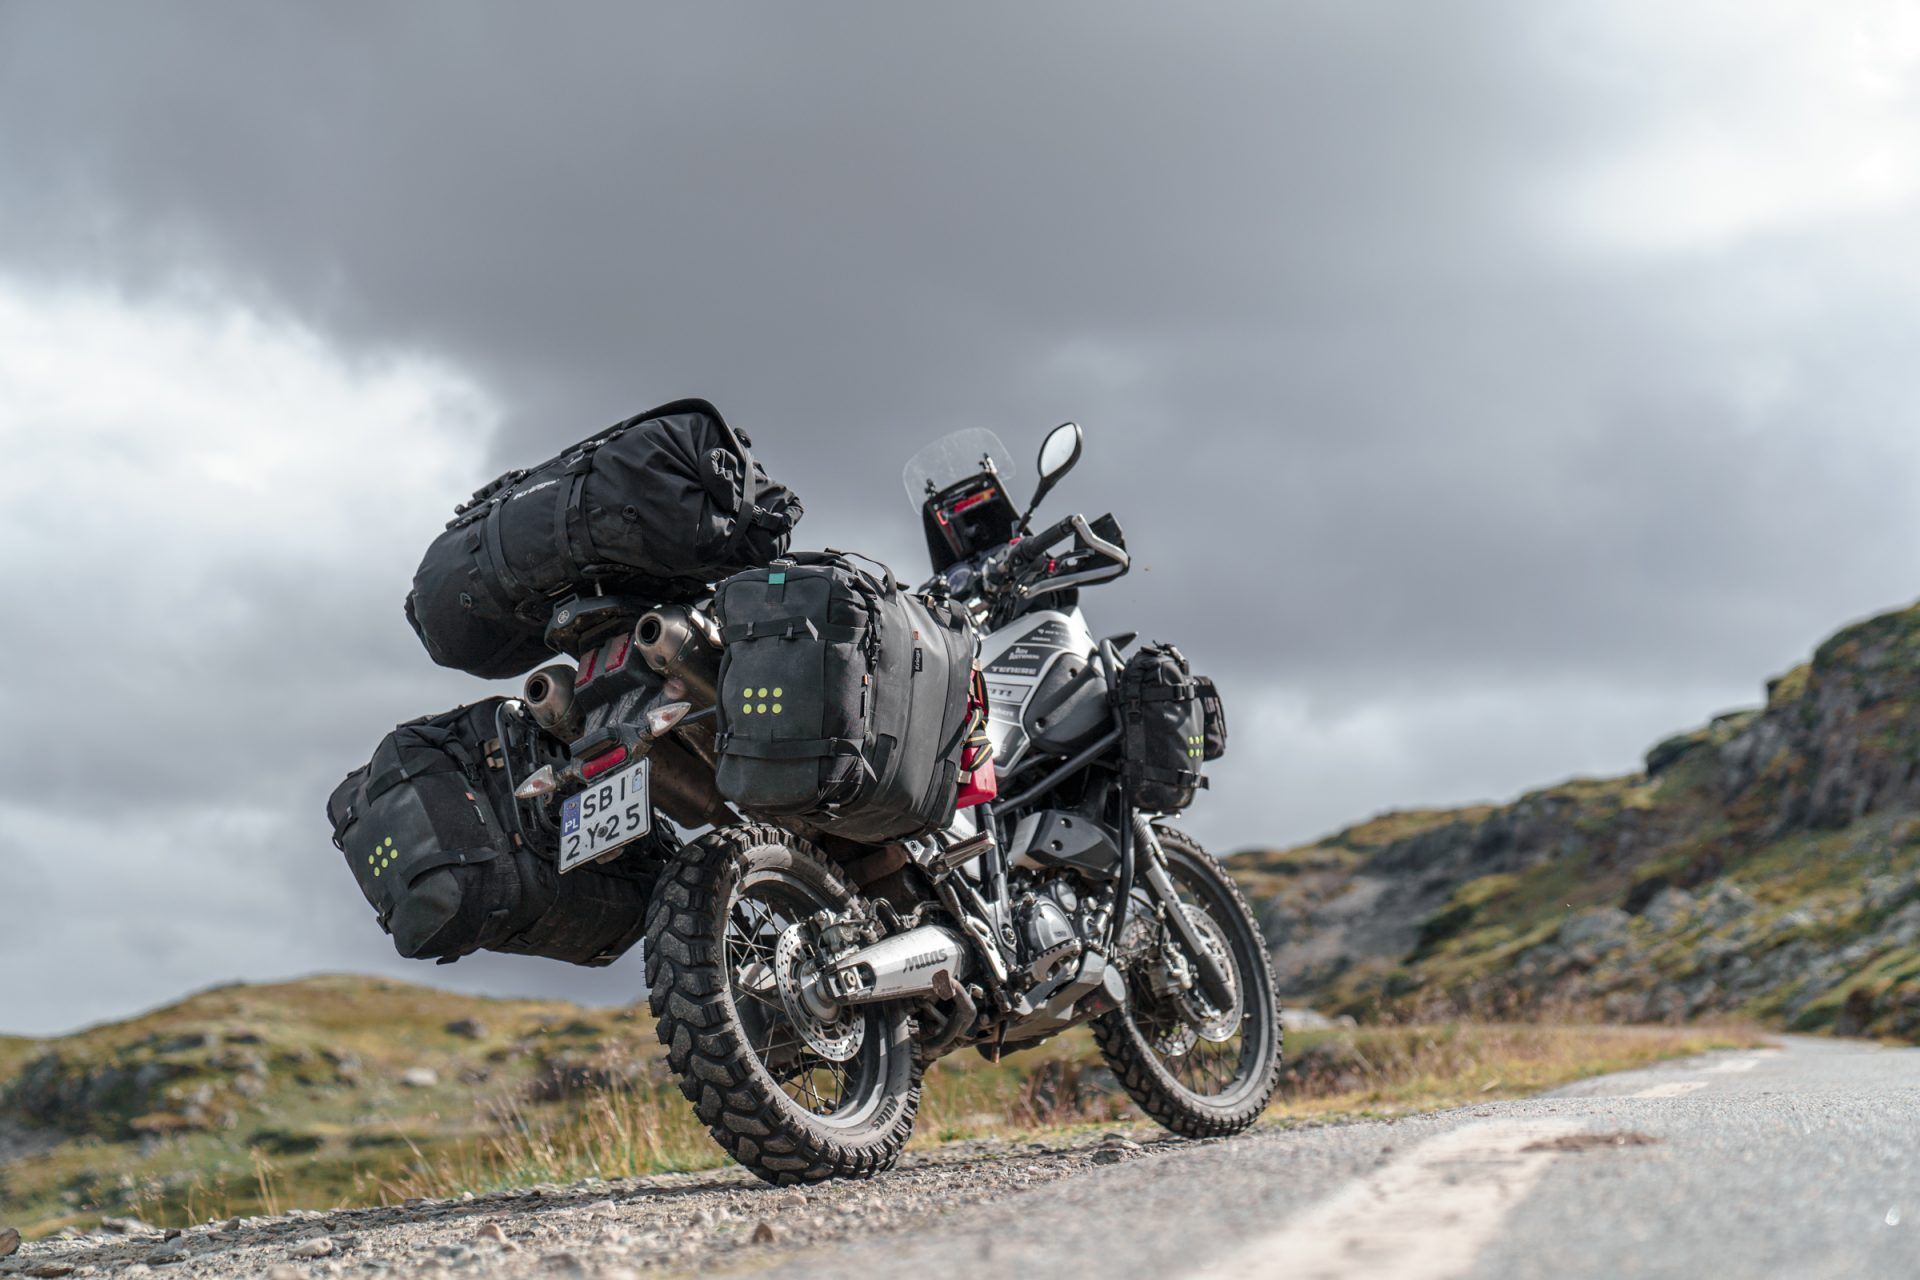 Adventure motorcycle luggage